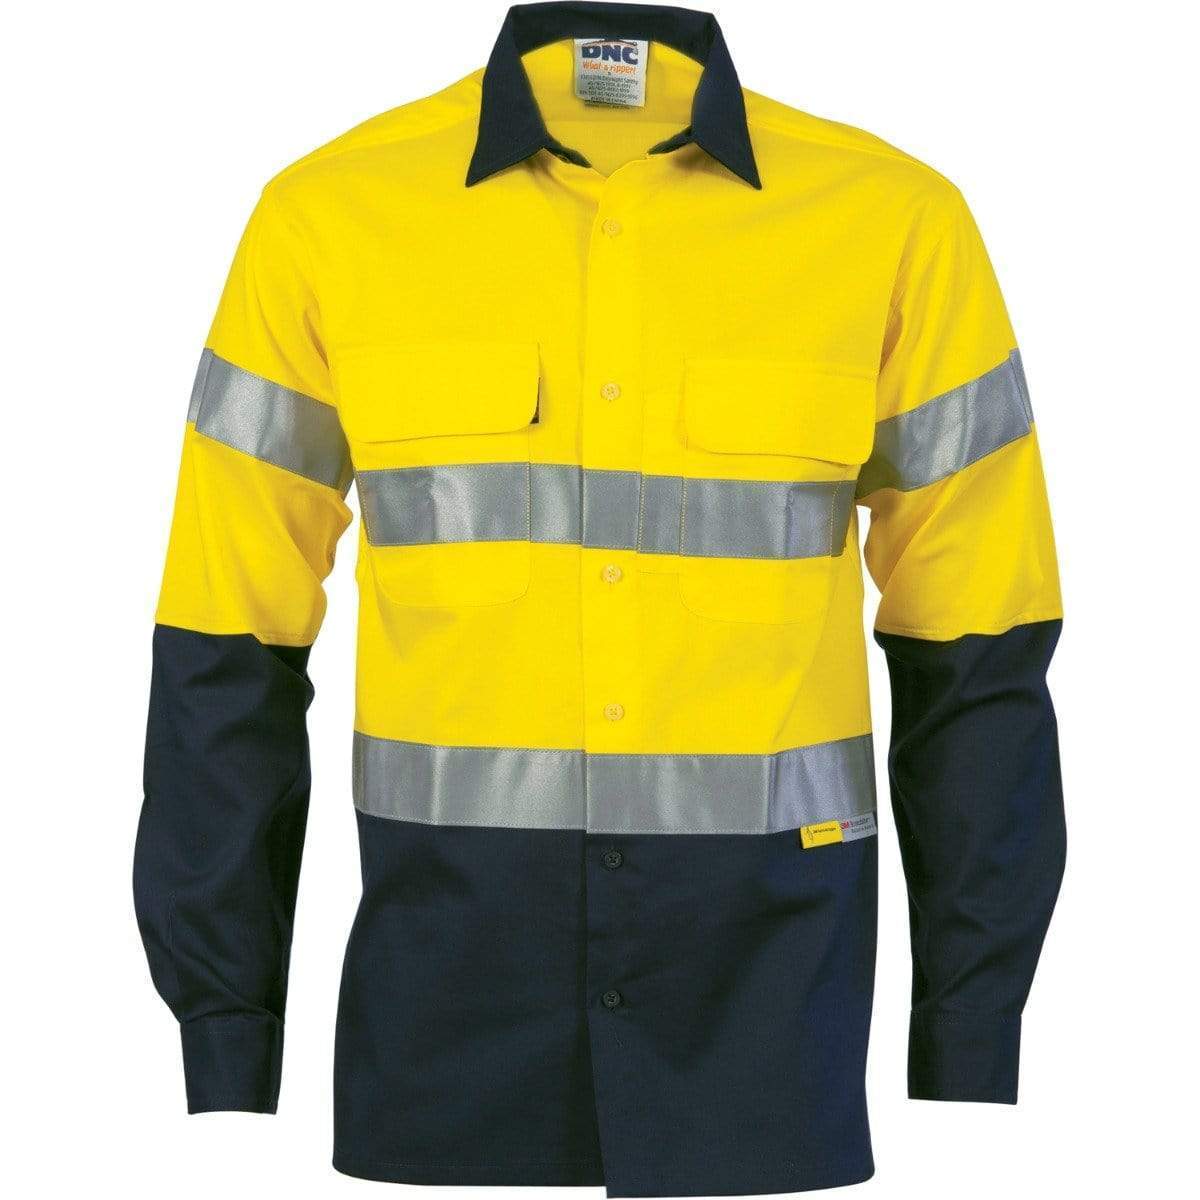 Dnc Workwear Hi-vis Cool-breeze Cotton Long Sleeve Shirt With 3m 8906 Reflective Tape - 3988 Work Wear DNC Workwear Yellow/Navy S 